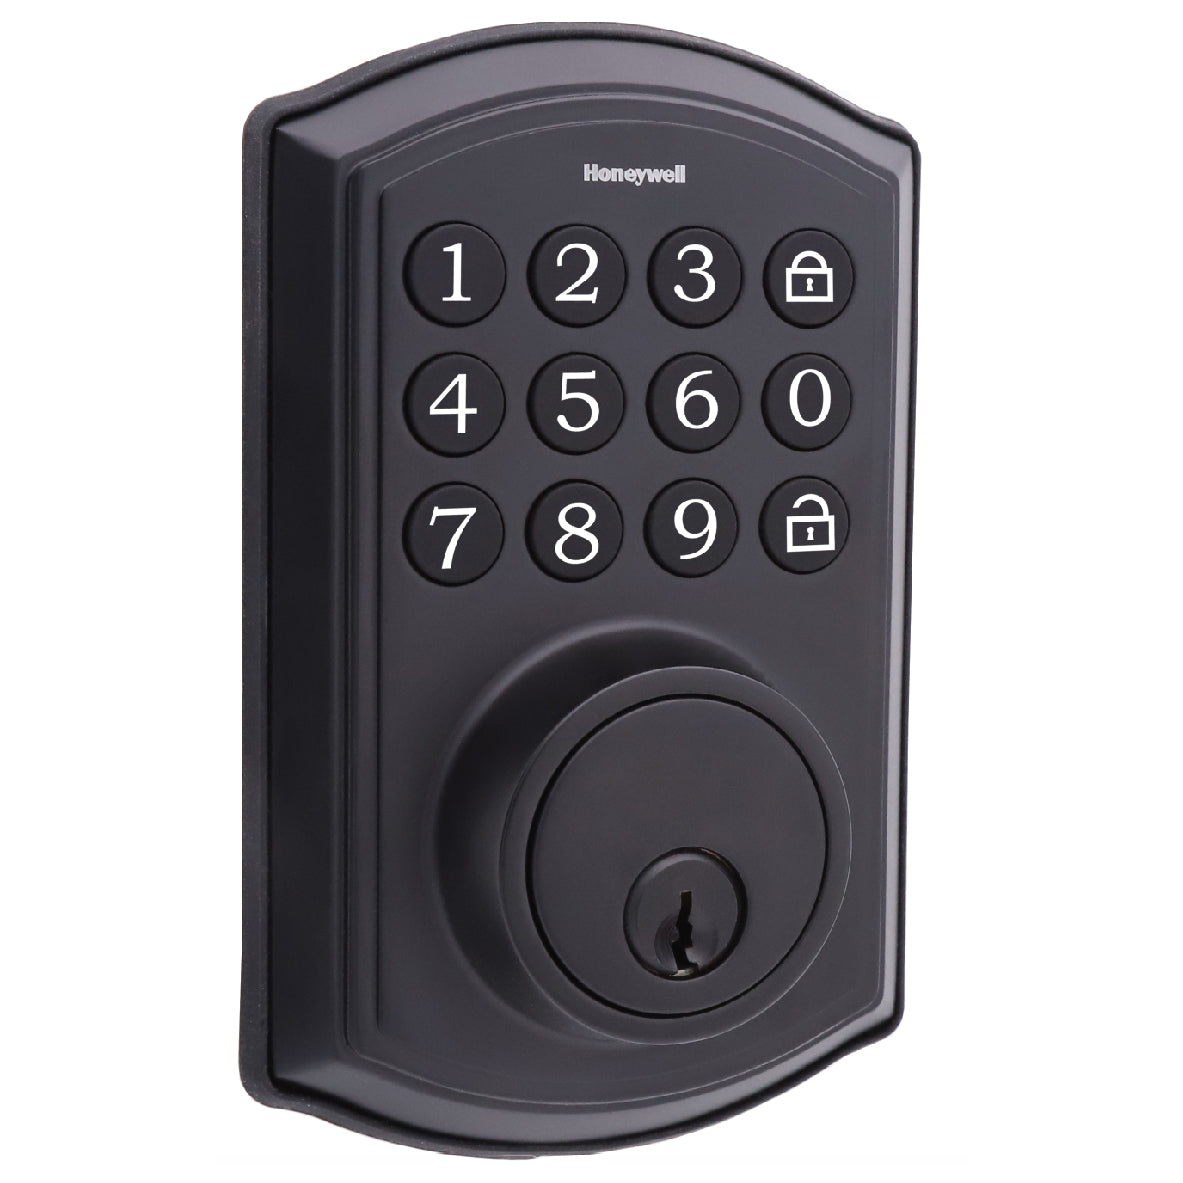 Honeywell 8635028 Digital Deadbolt Door Lock with Electronic Keypad